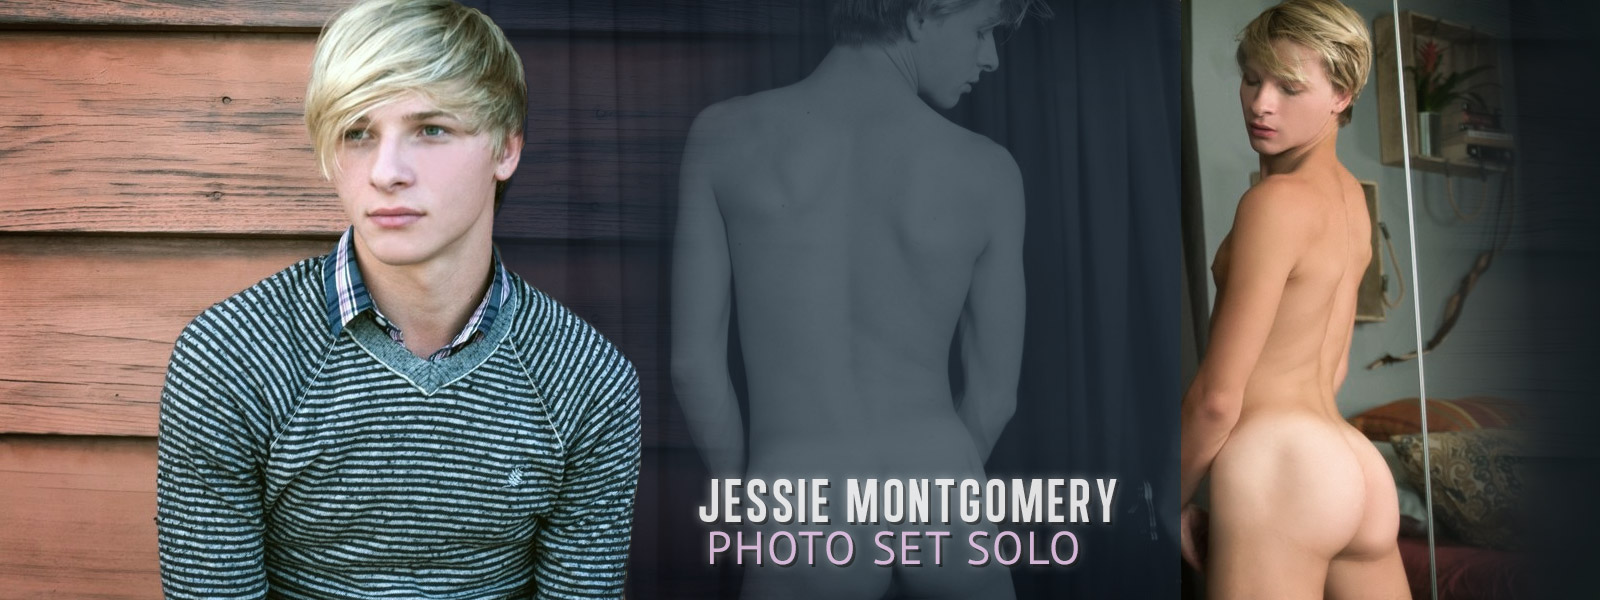 Jessie's Photo Shoot